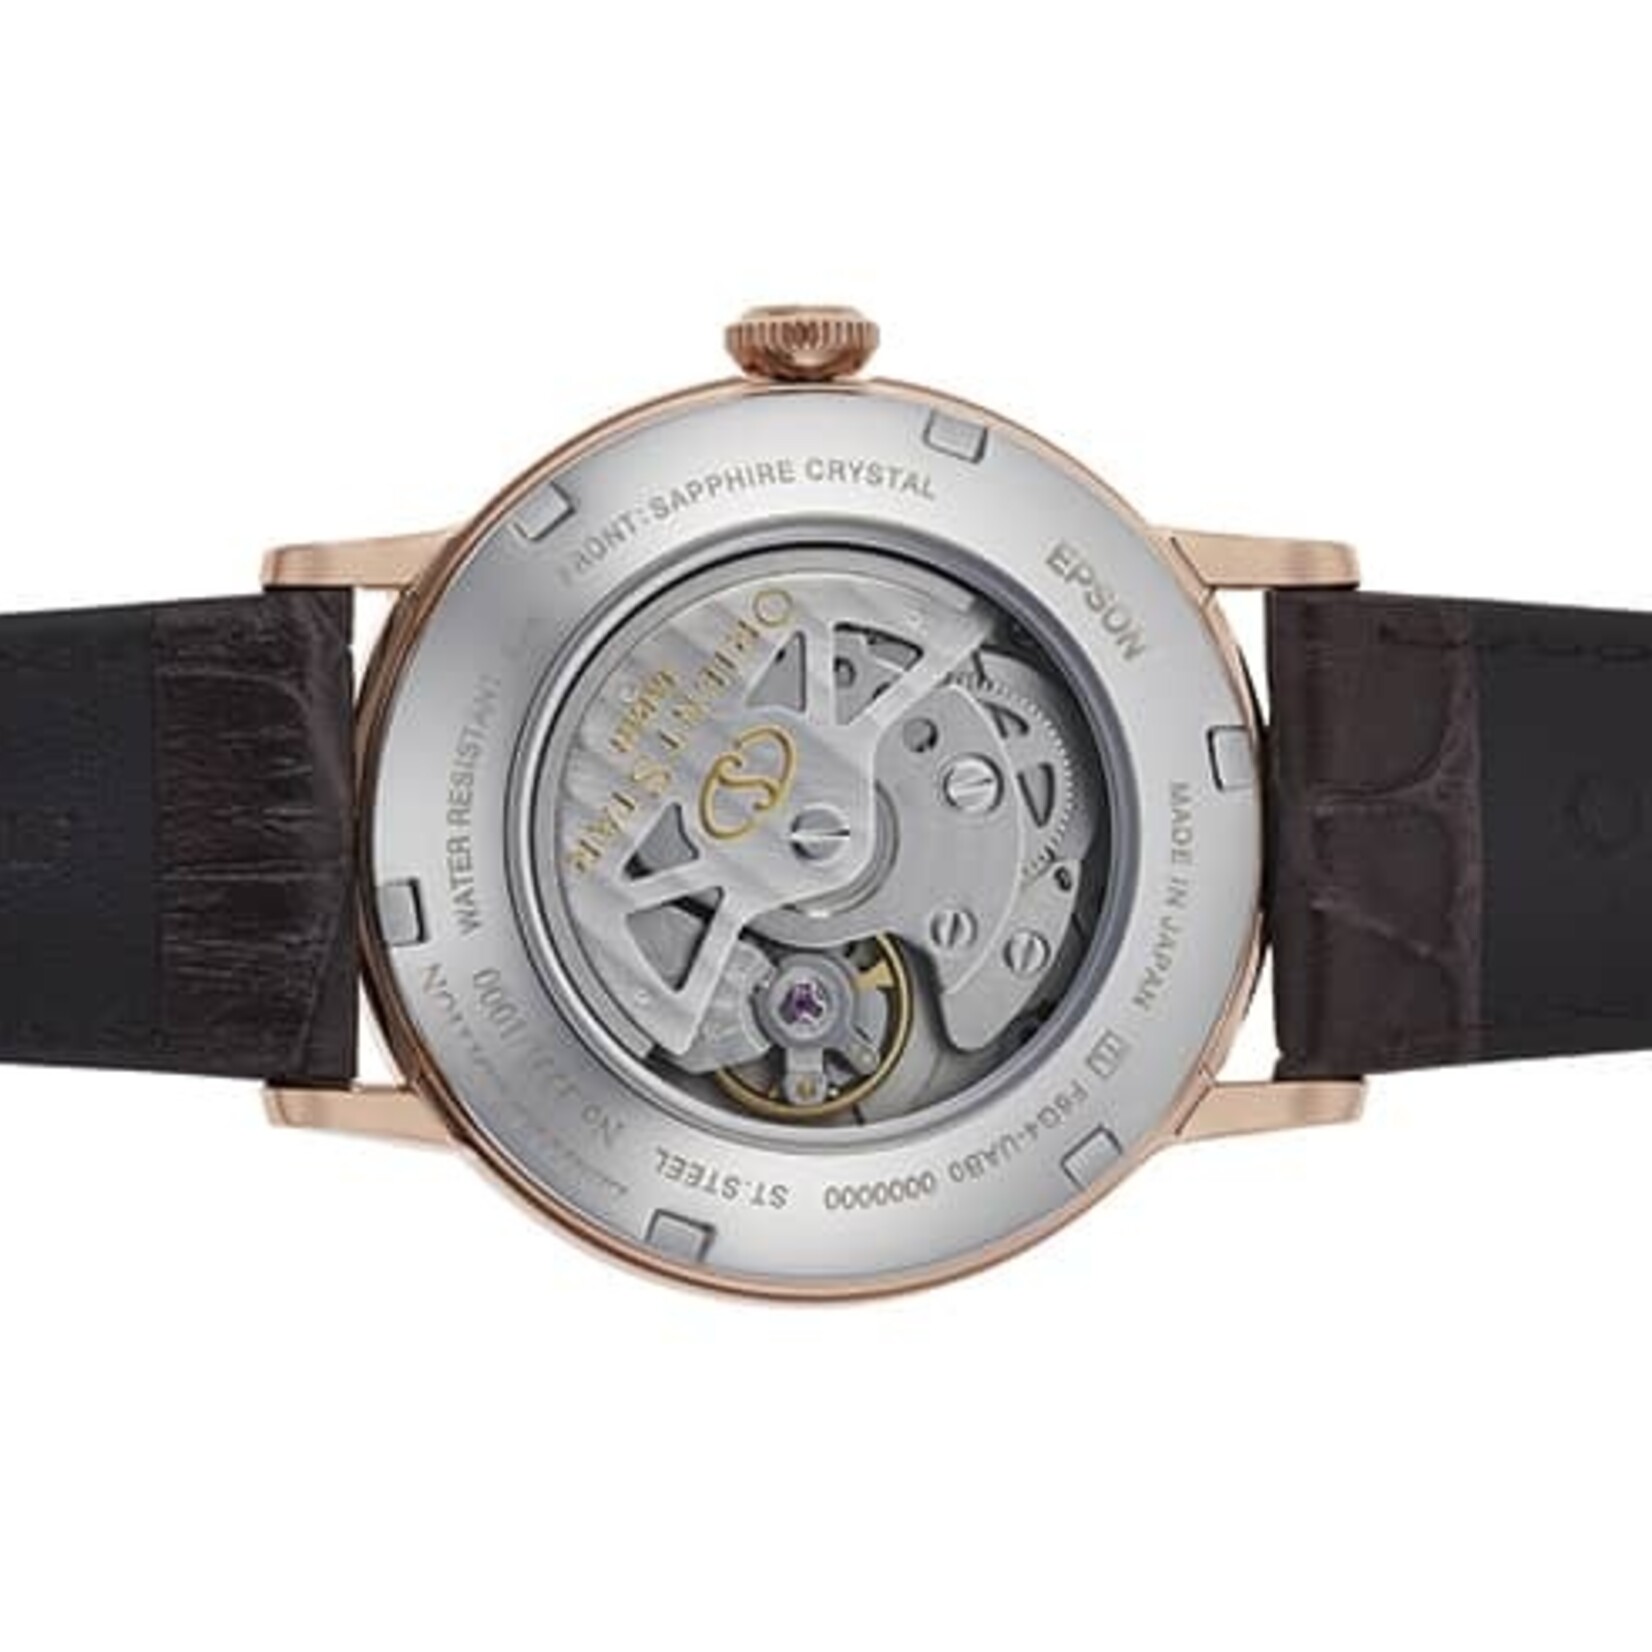 Orient Orient Star horloge re-aw0005l00b  - classic horloge - limited edition 5ATM